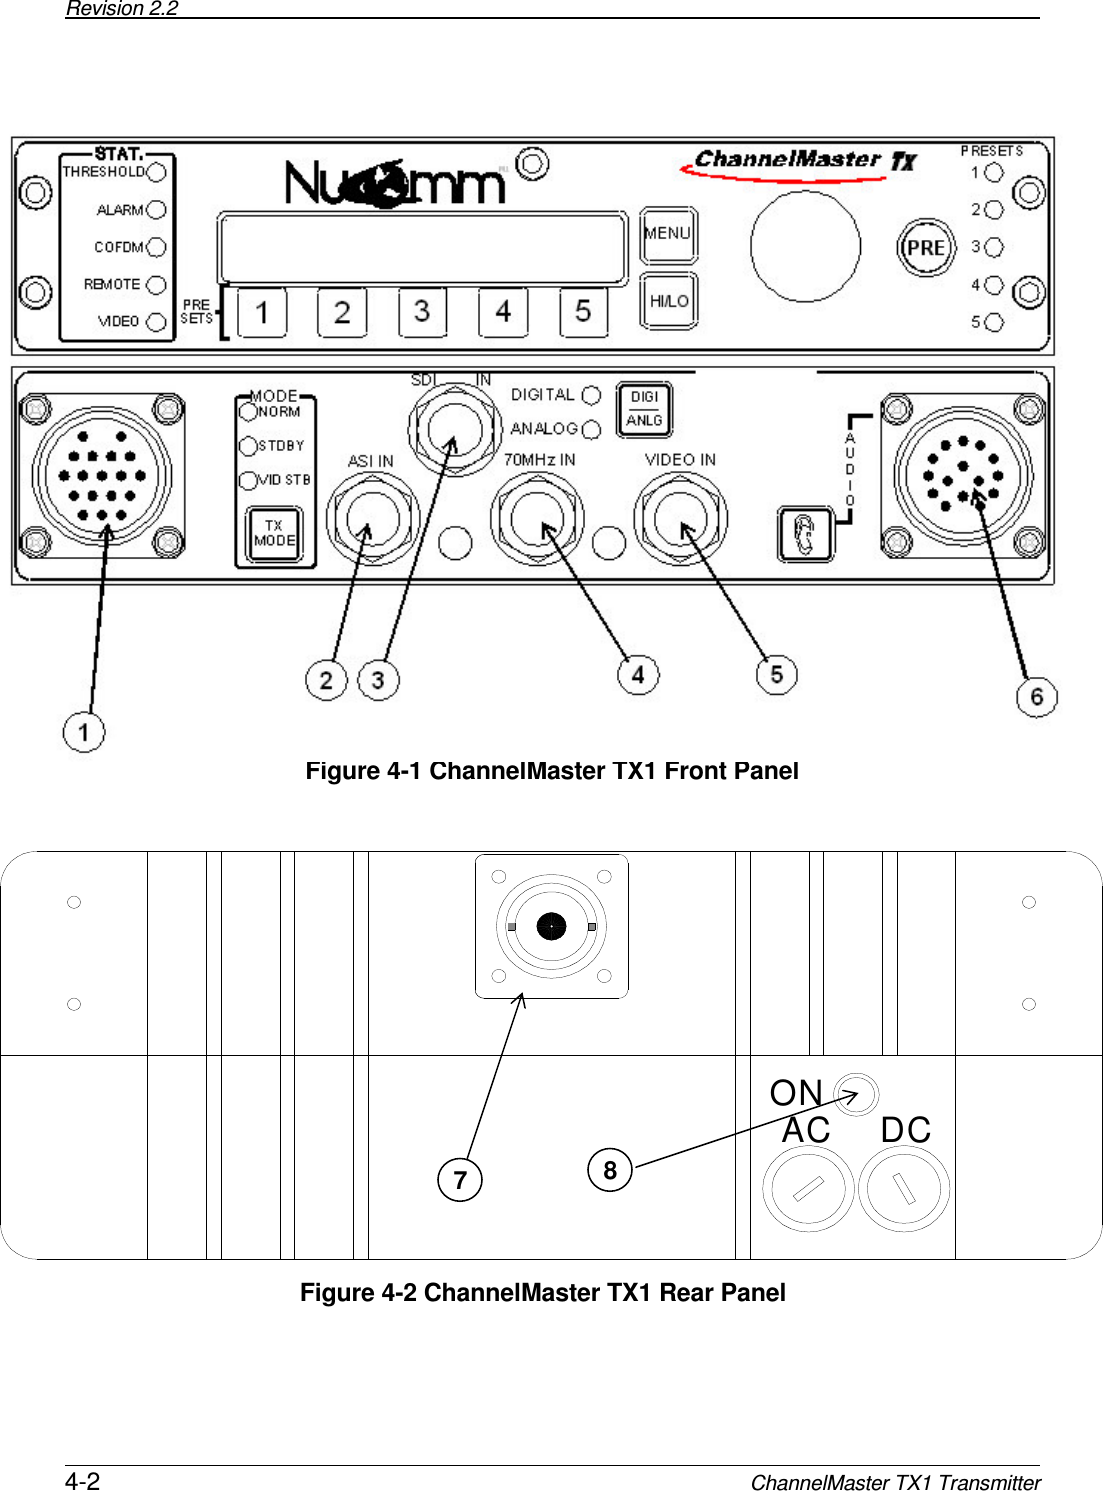 Revision 2.2      4-2 ChannelMaster TX1 Transmitter                            Figure 4-1 ChannelMaster TX1 Front Panel                   Figure 4-2 ChannelMaster TX1 Rear PanelDCACON7  8 